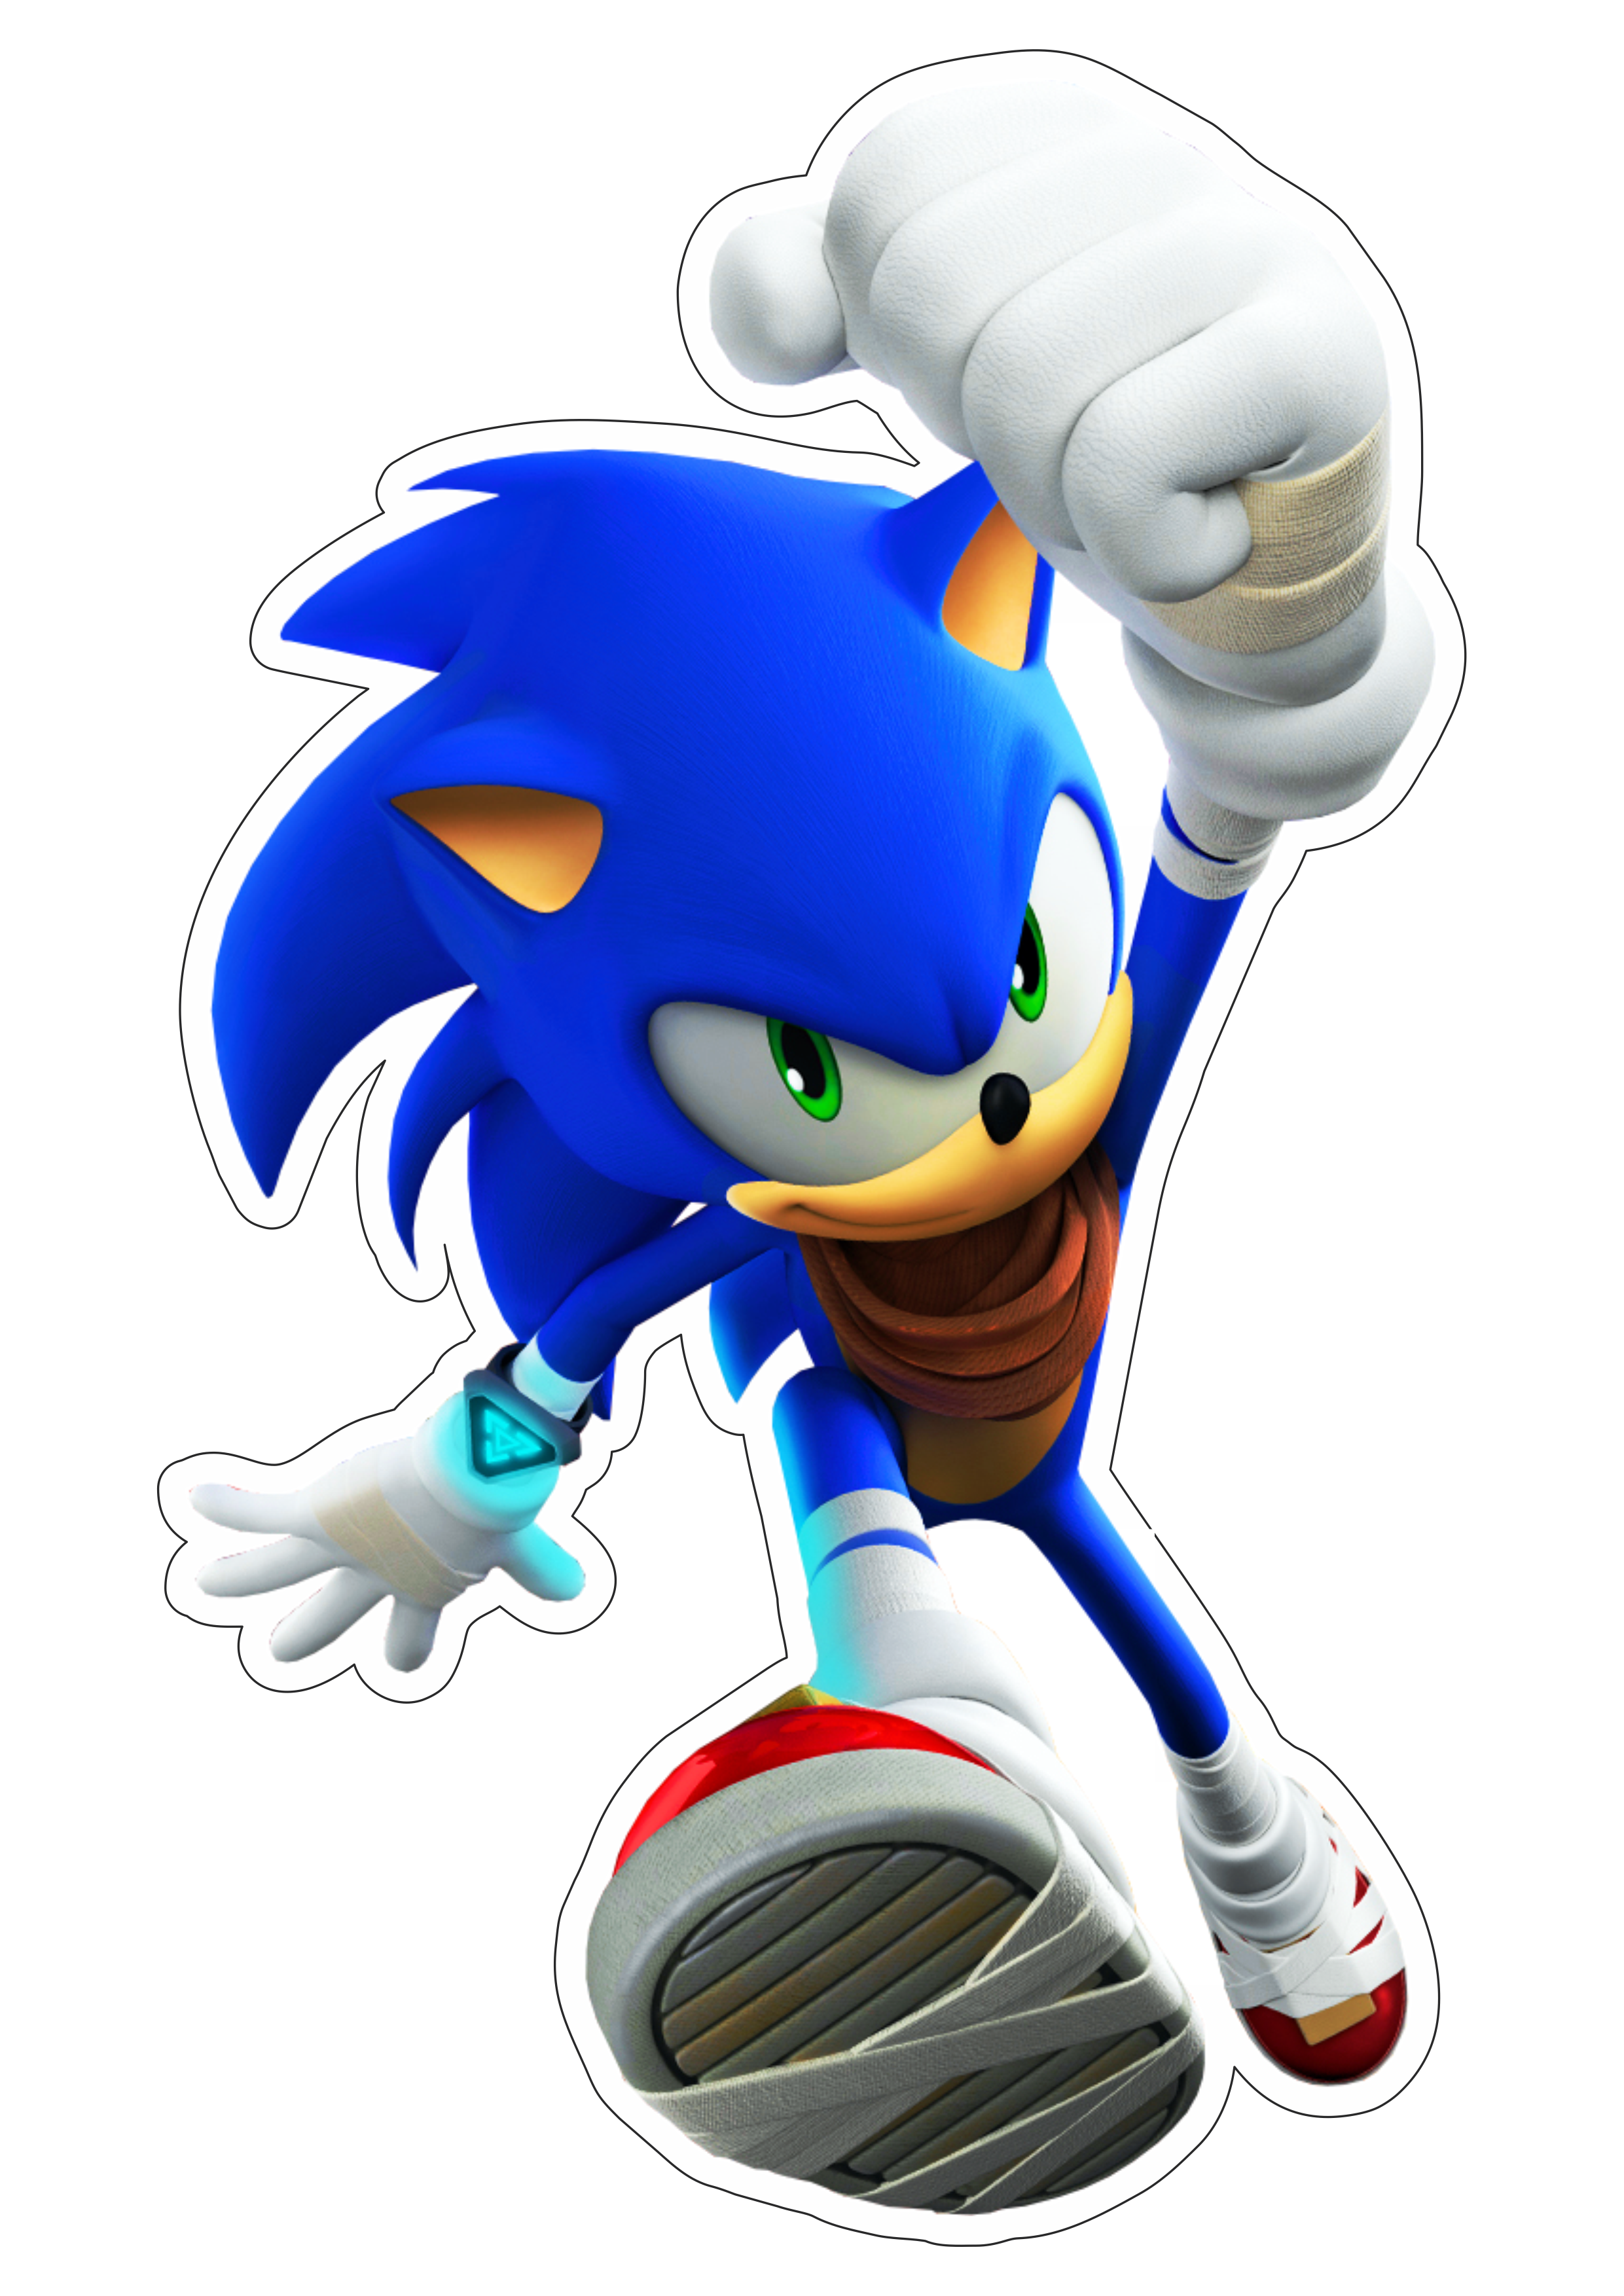 Sonic the hedgehog personagem de game infantil sega imagem sem fundo png